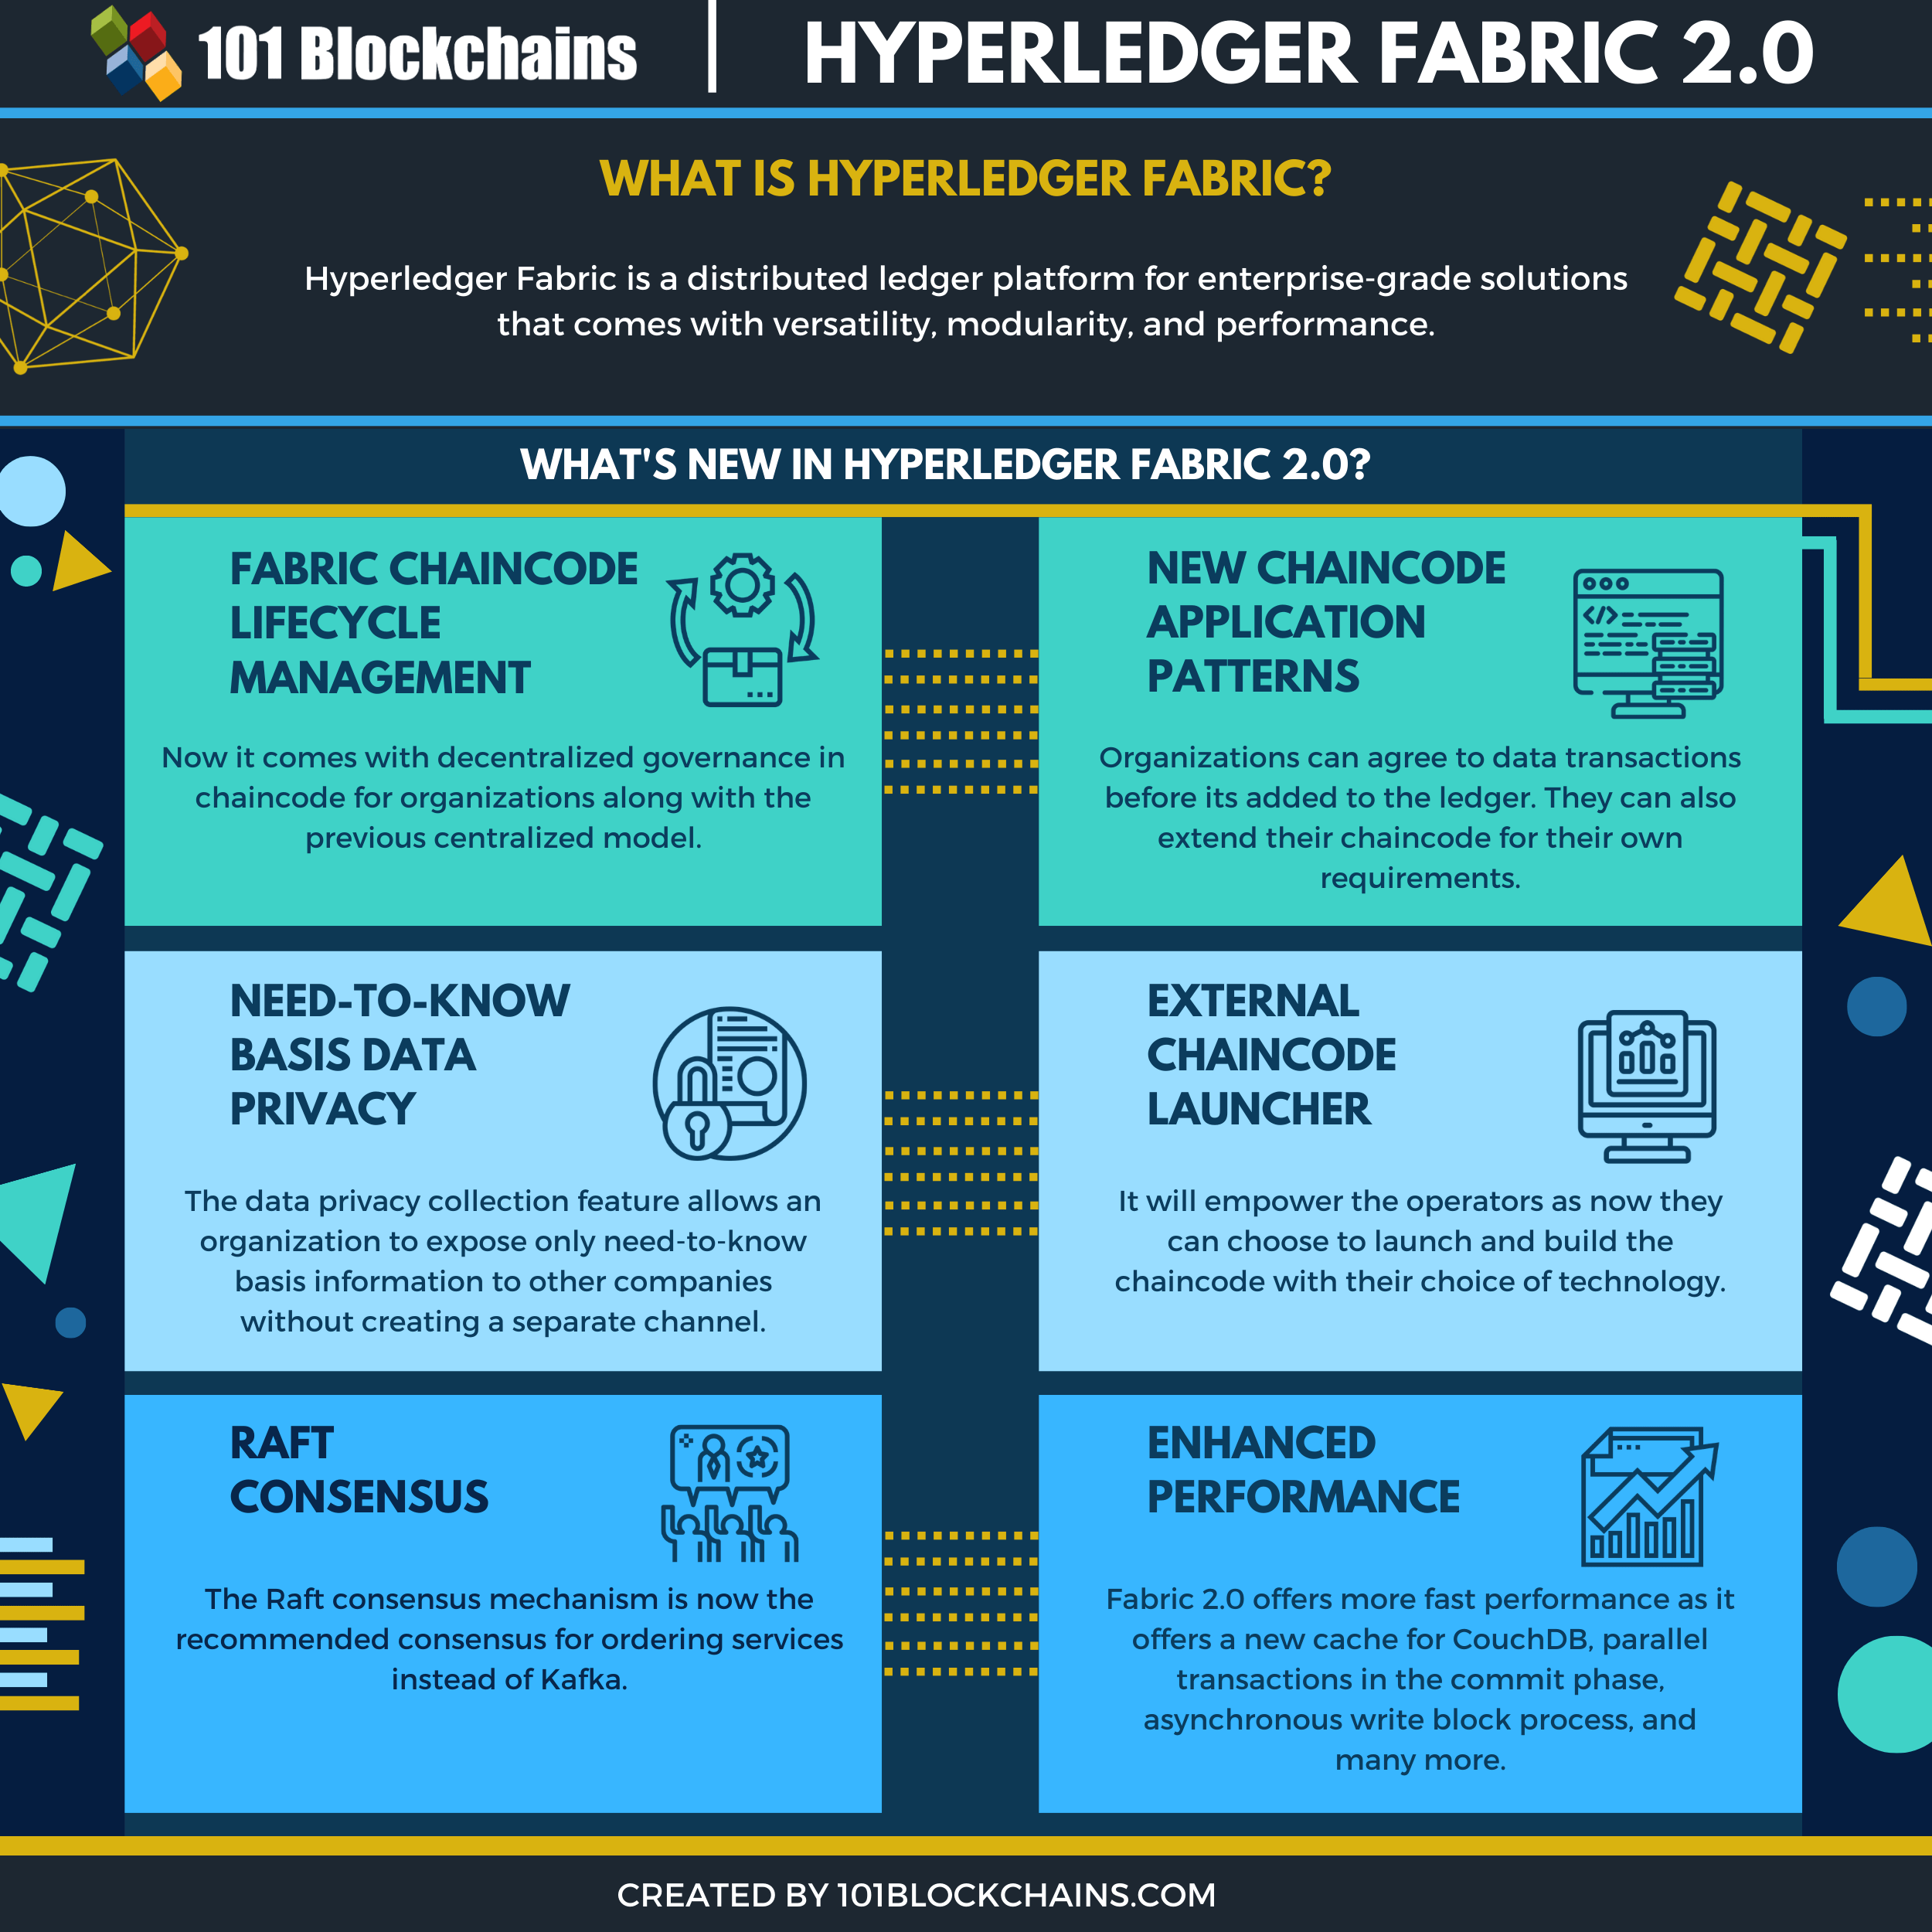 Hyperledger Fabric 2.0